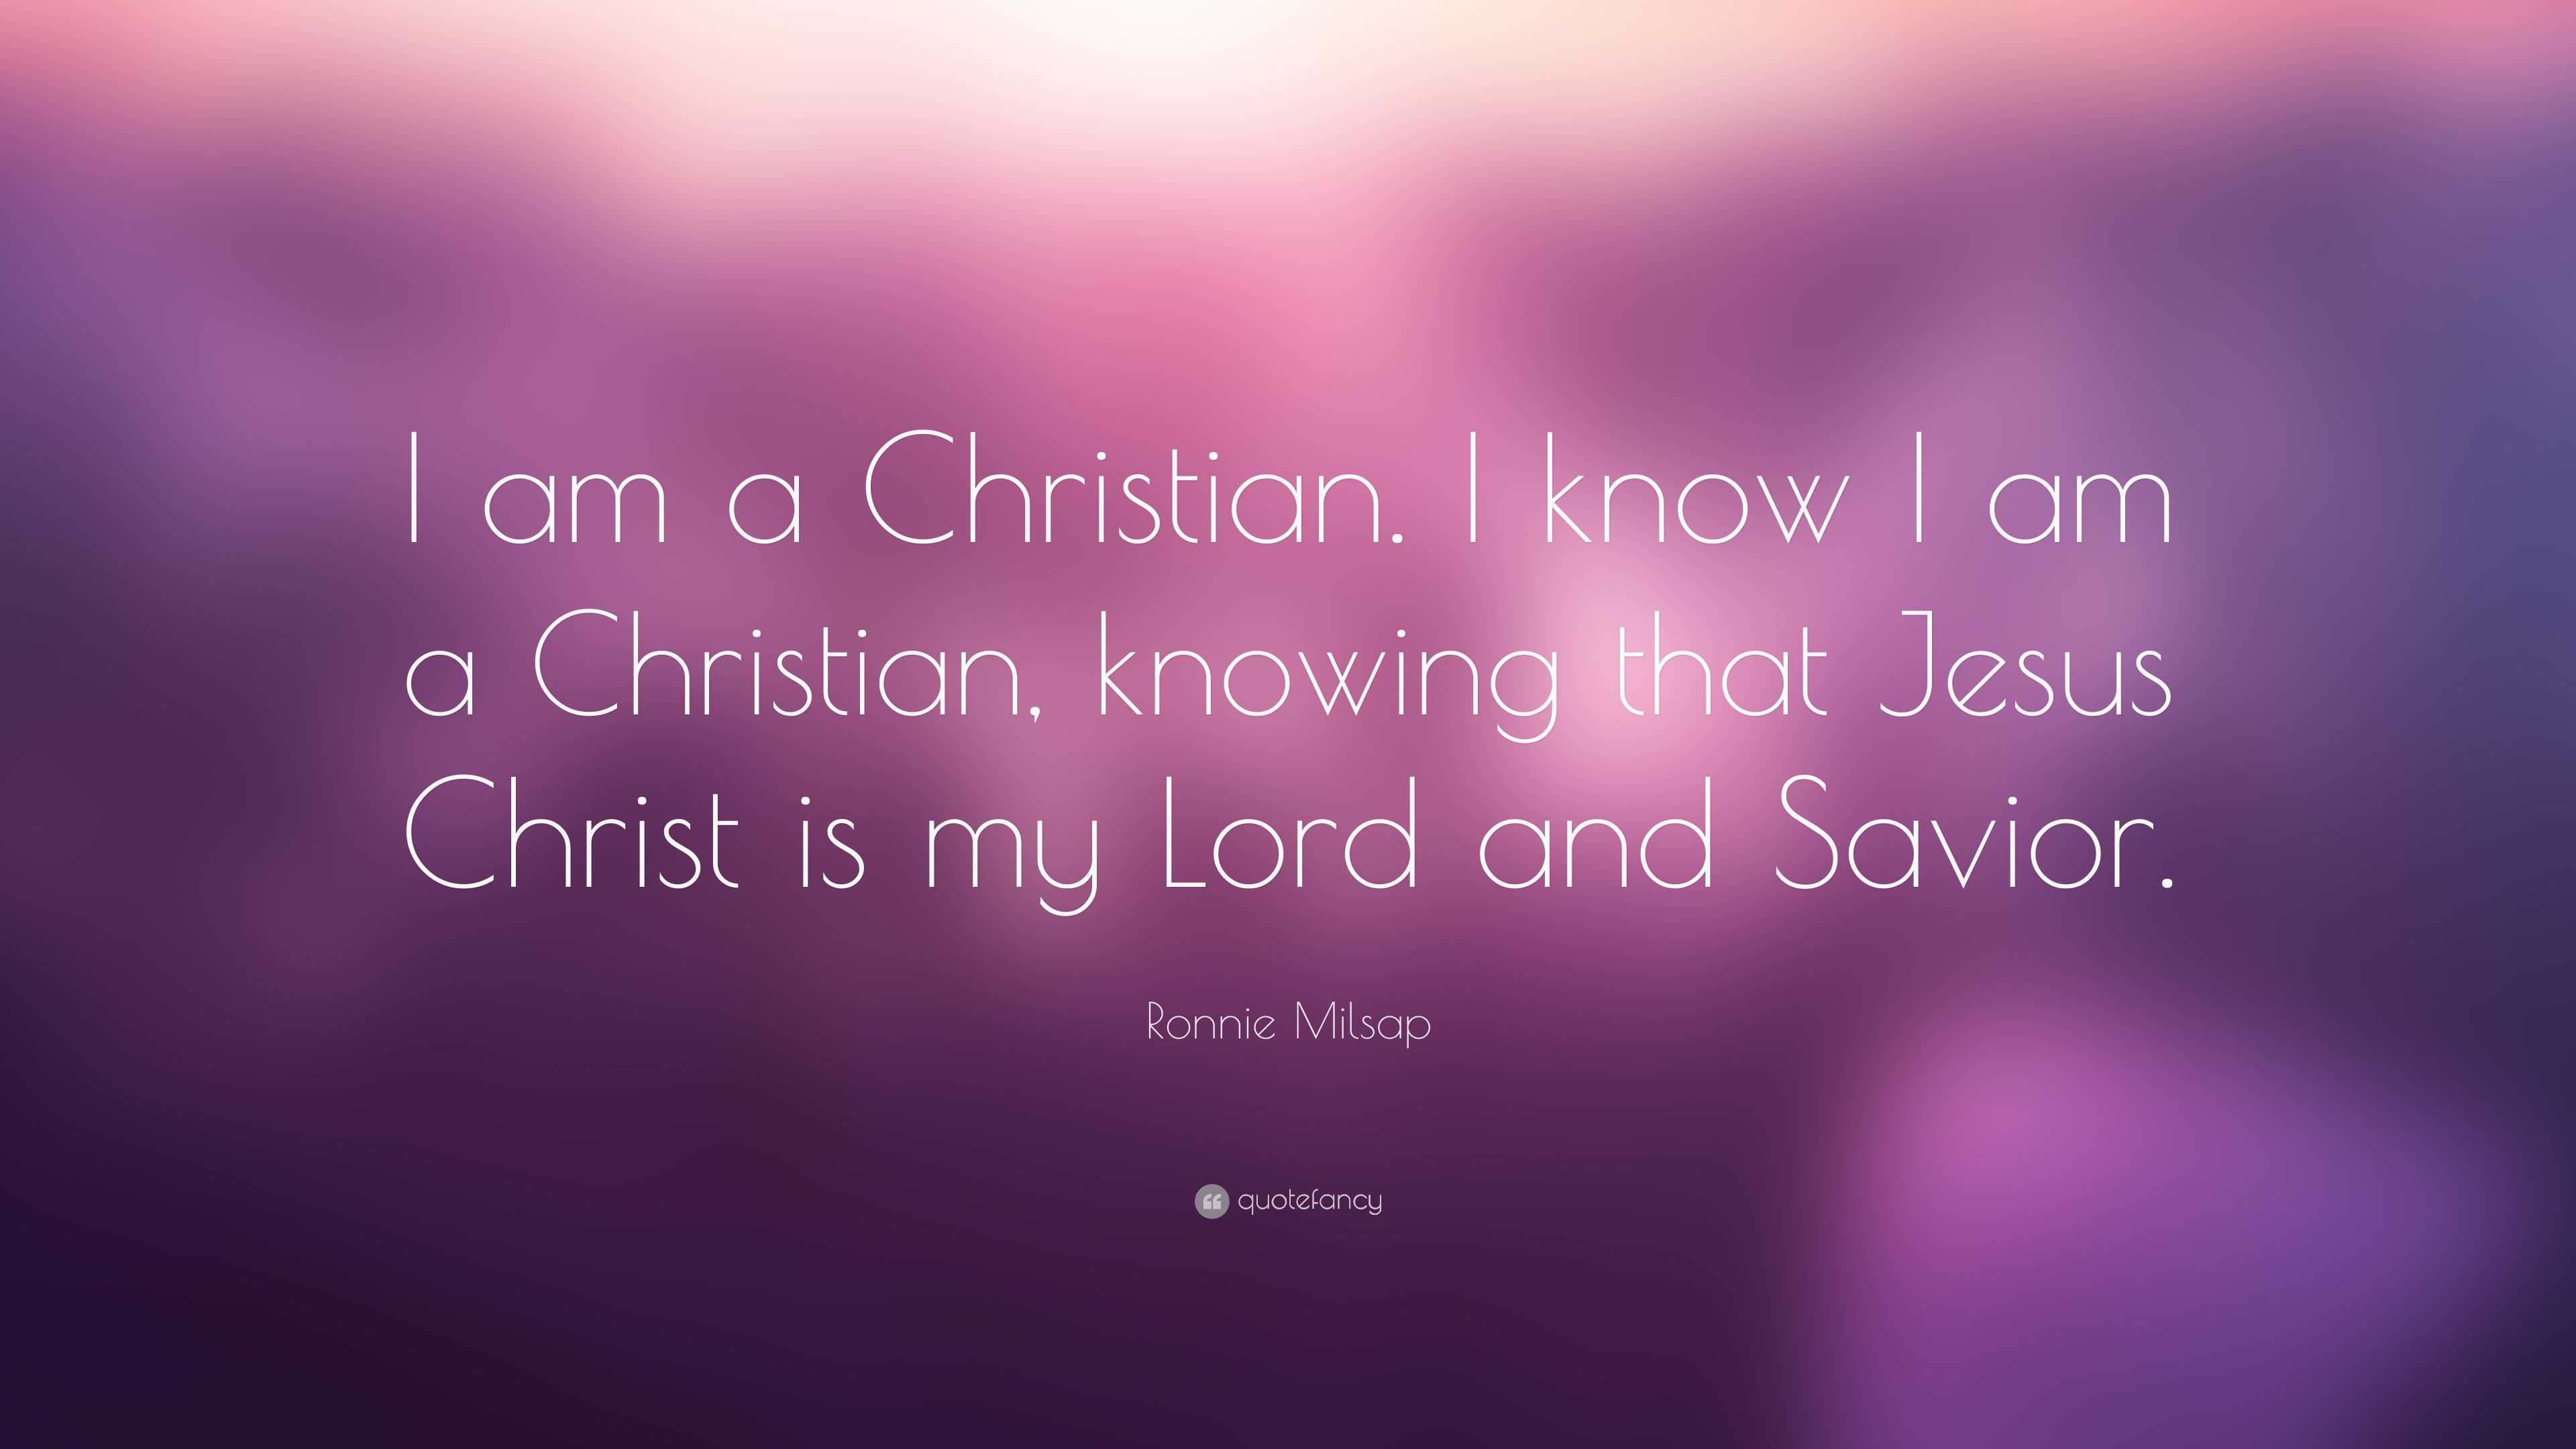 Ronnie Milsap Quote: “I am a Christian. I know I am a Christian ...